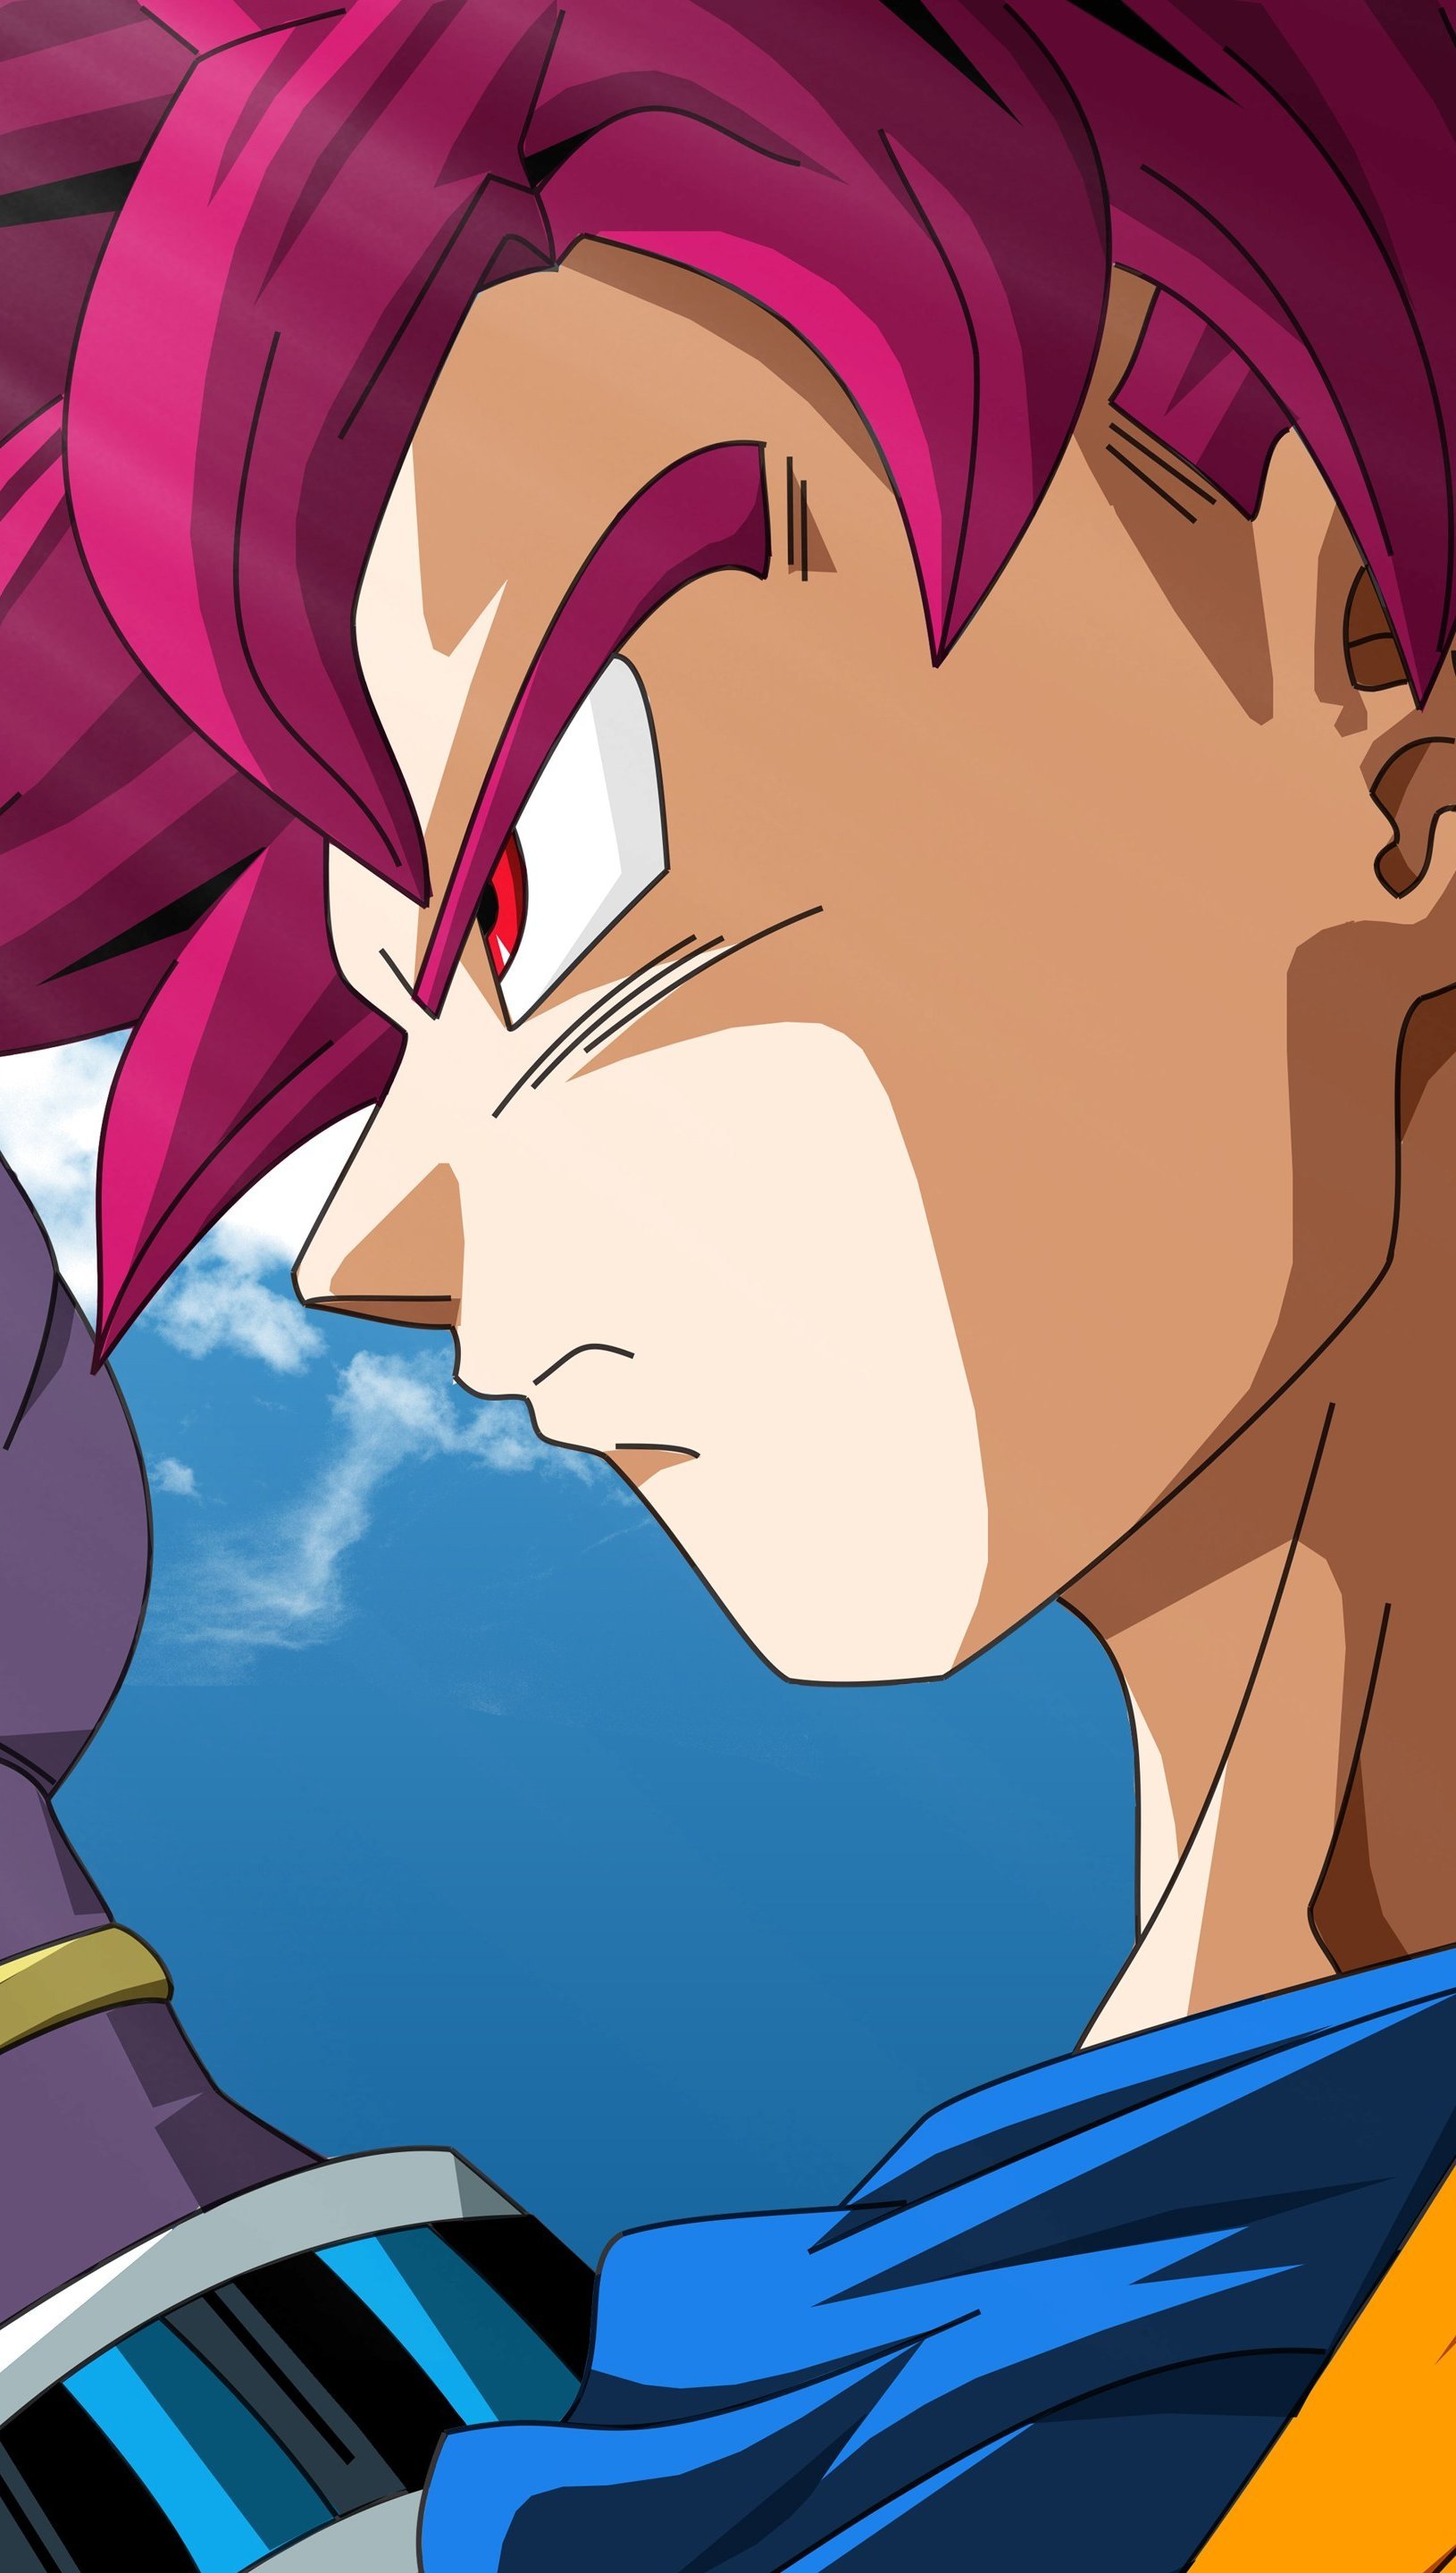 Fondos de pantalla Anime Beerus y Goku Super Saiyan God Vertical